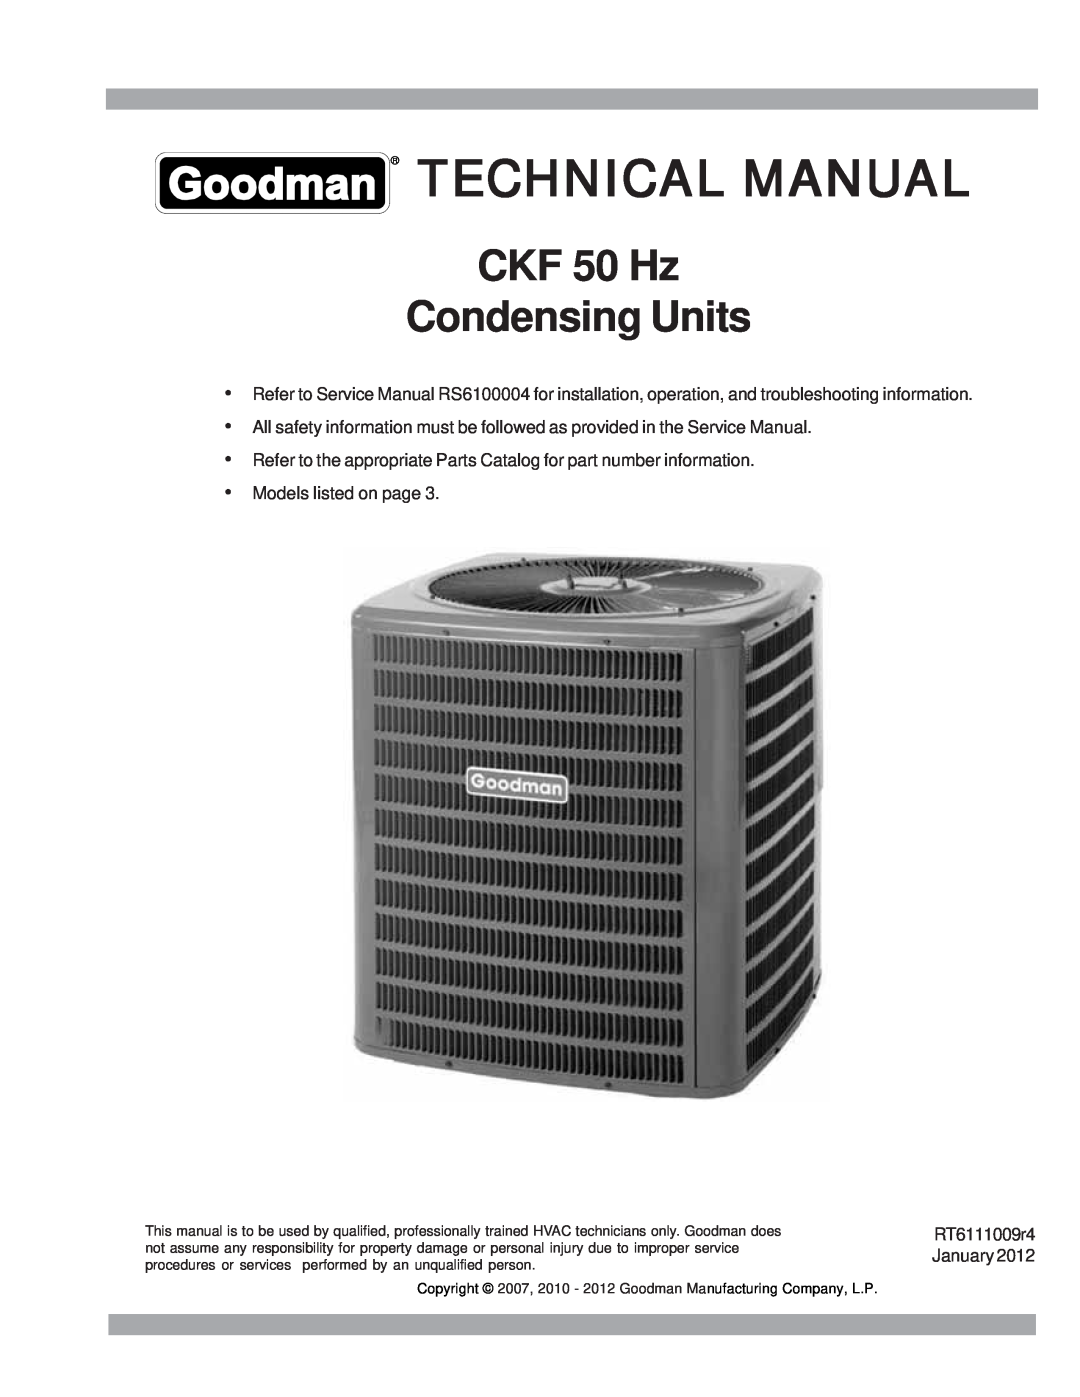 Goodman Mfg CKF50Hz service manual Technical Manual, CKF 50 Hz Condensing Units 